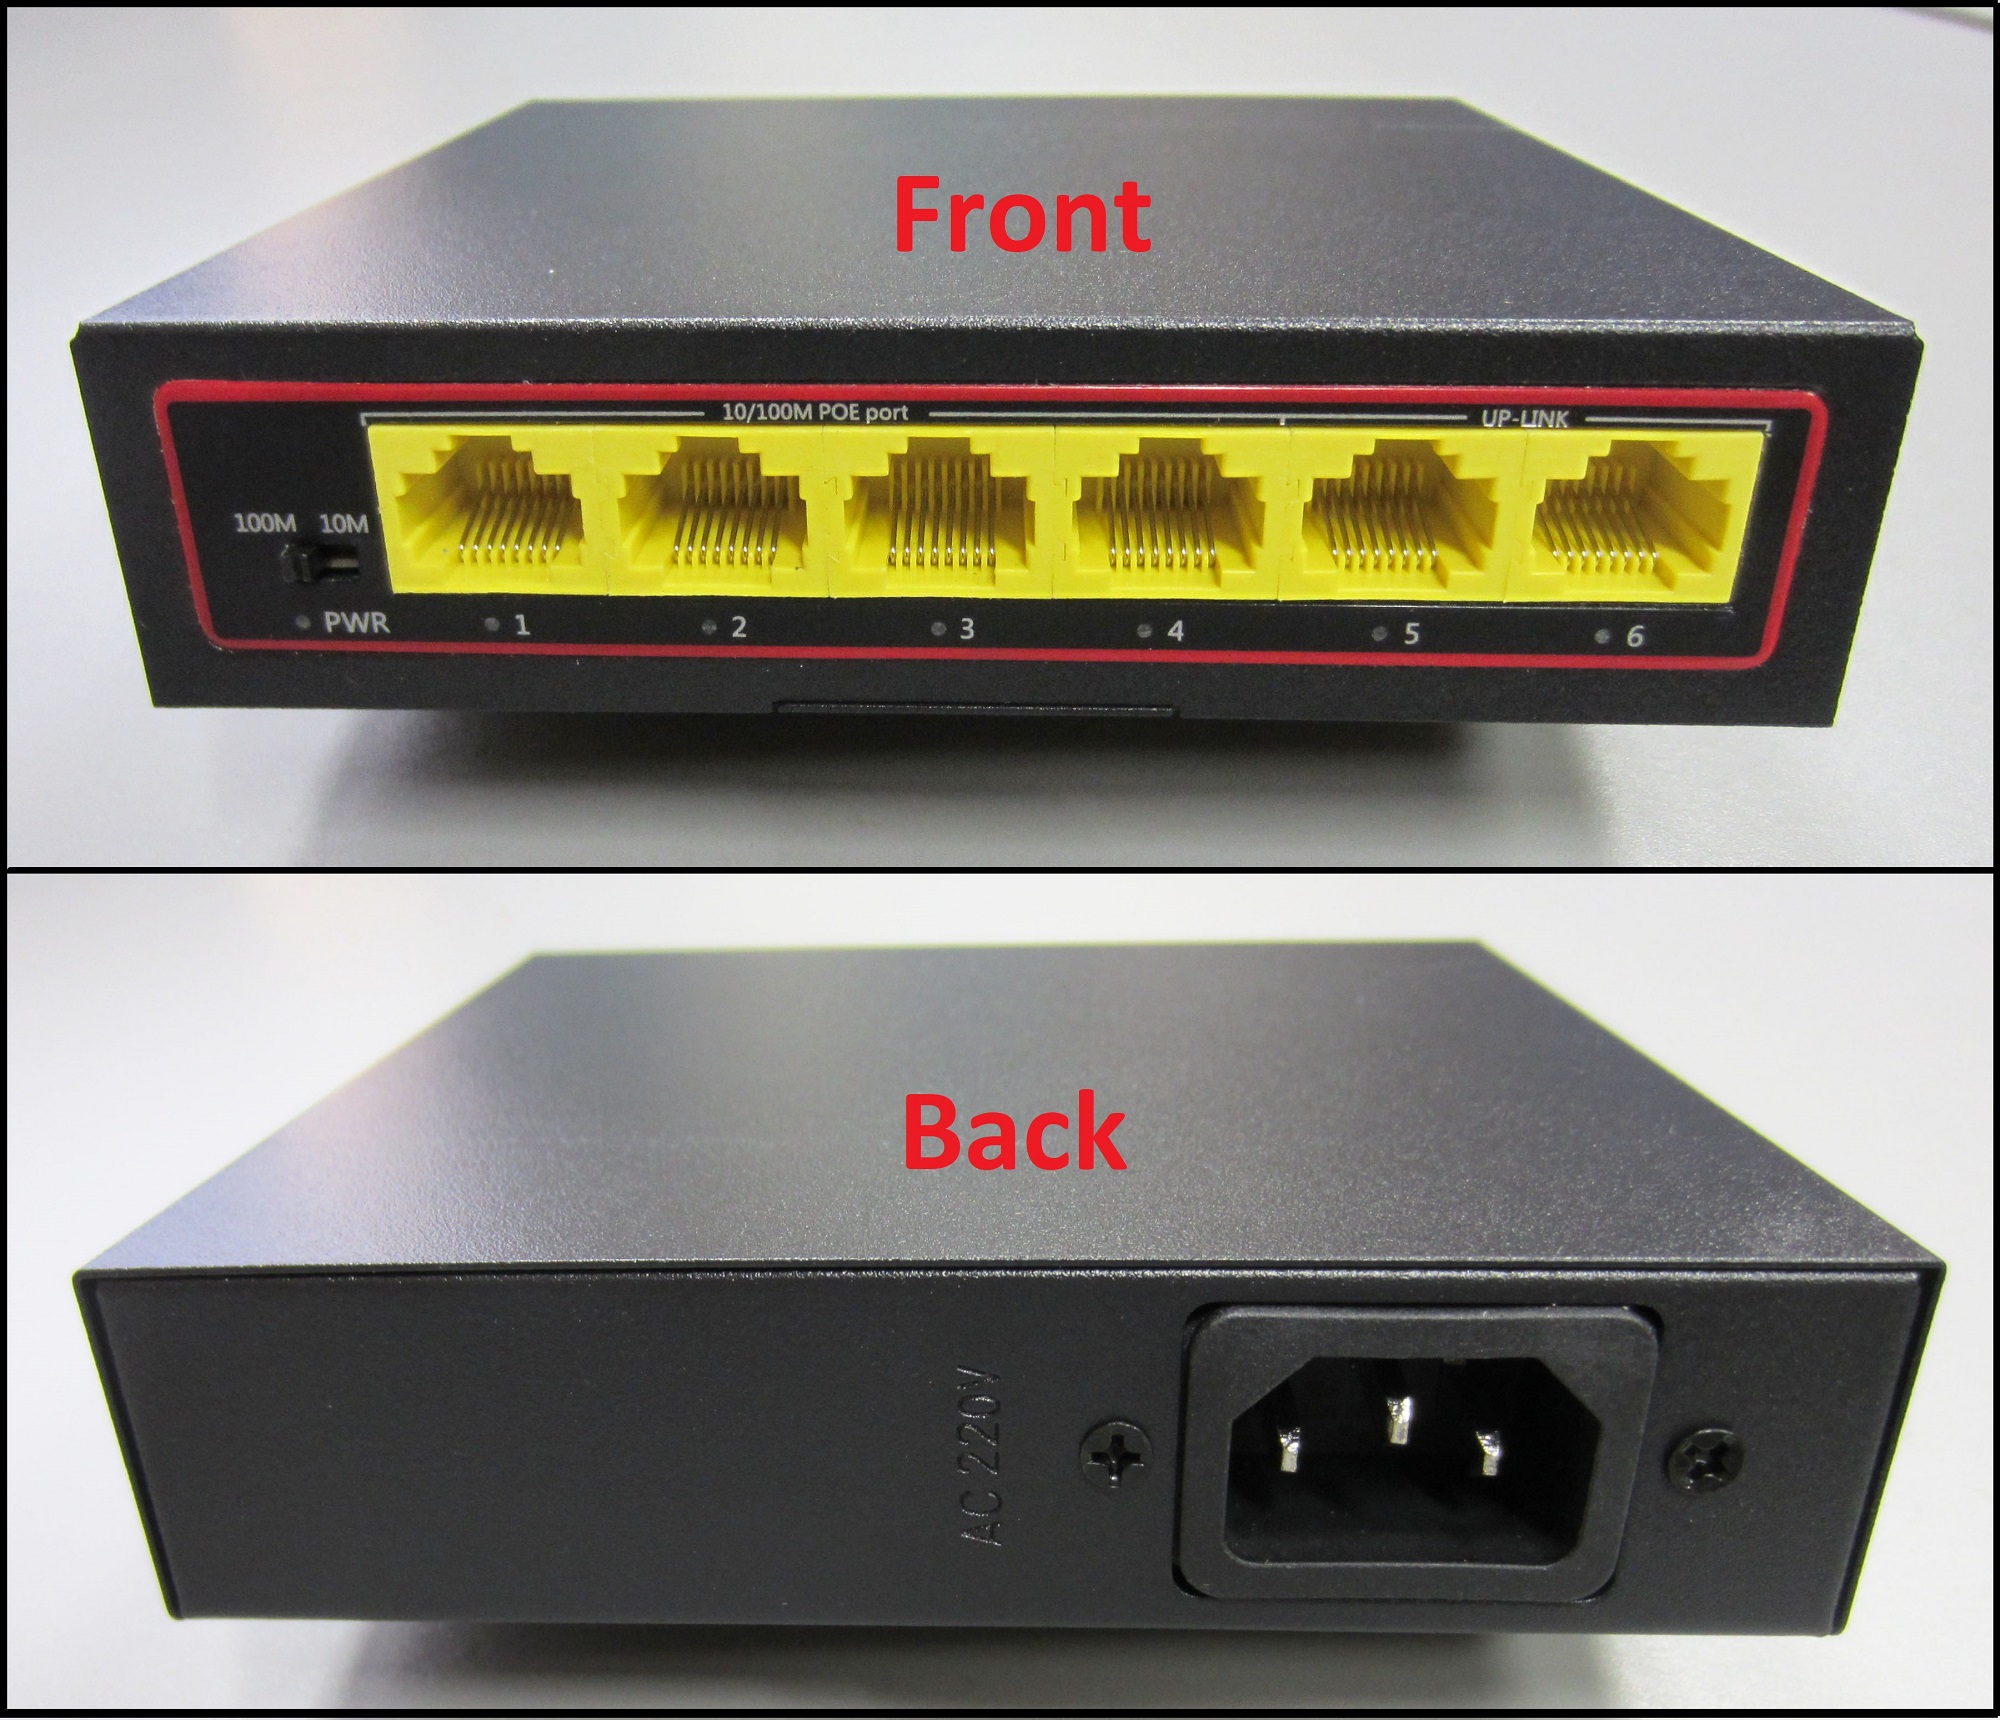 4 PoE+ Ports &2 Fast Ethernet uplink,65W 802.3af/at SODOLA 4 Port PoE+ Switch Extend Function Fanless Metal,Plug & Play Unmanaged Network Switch 